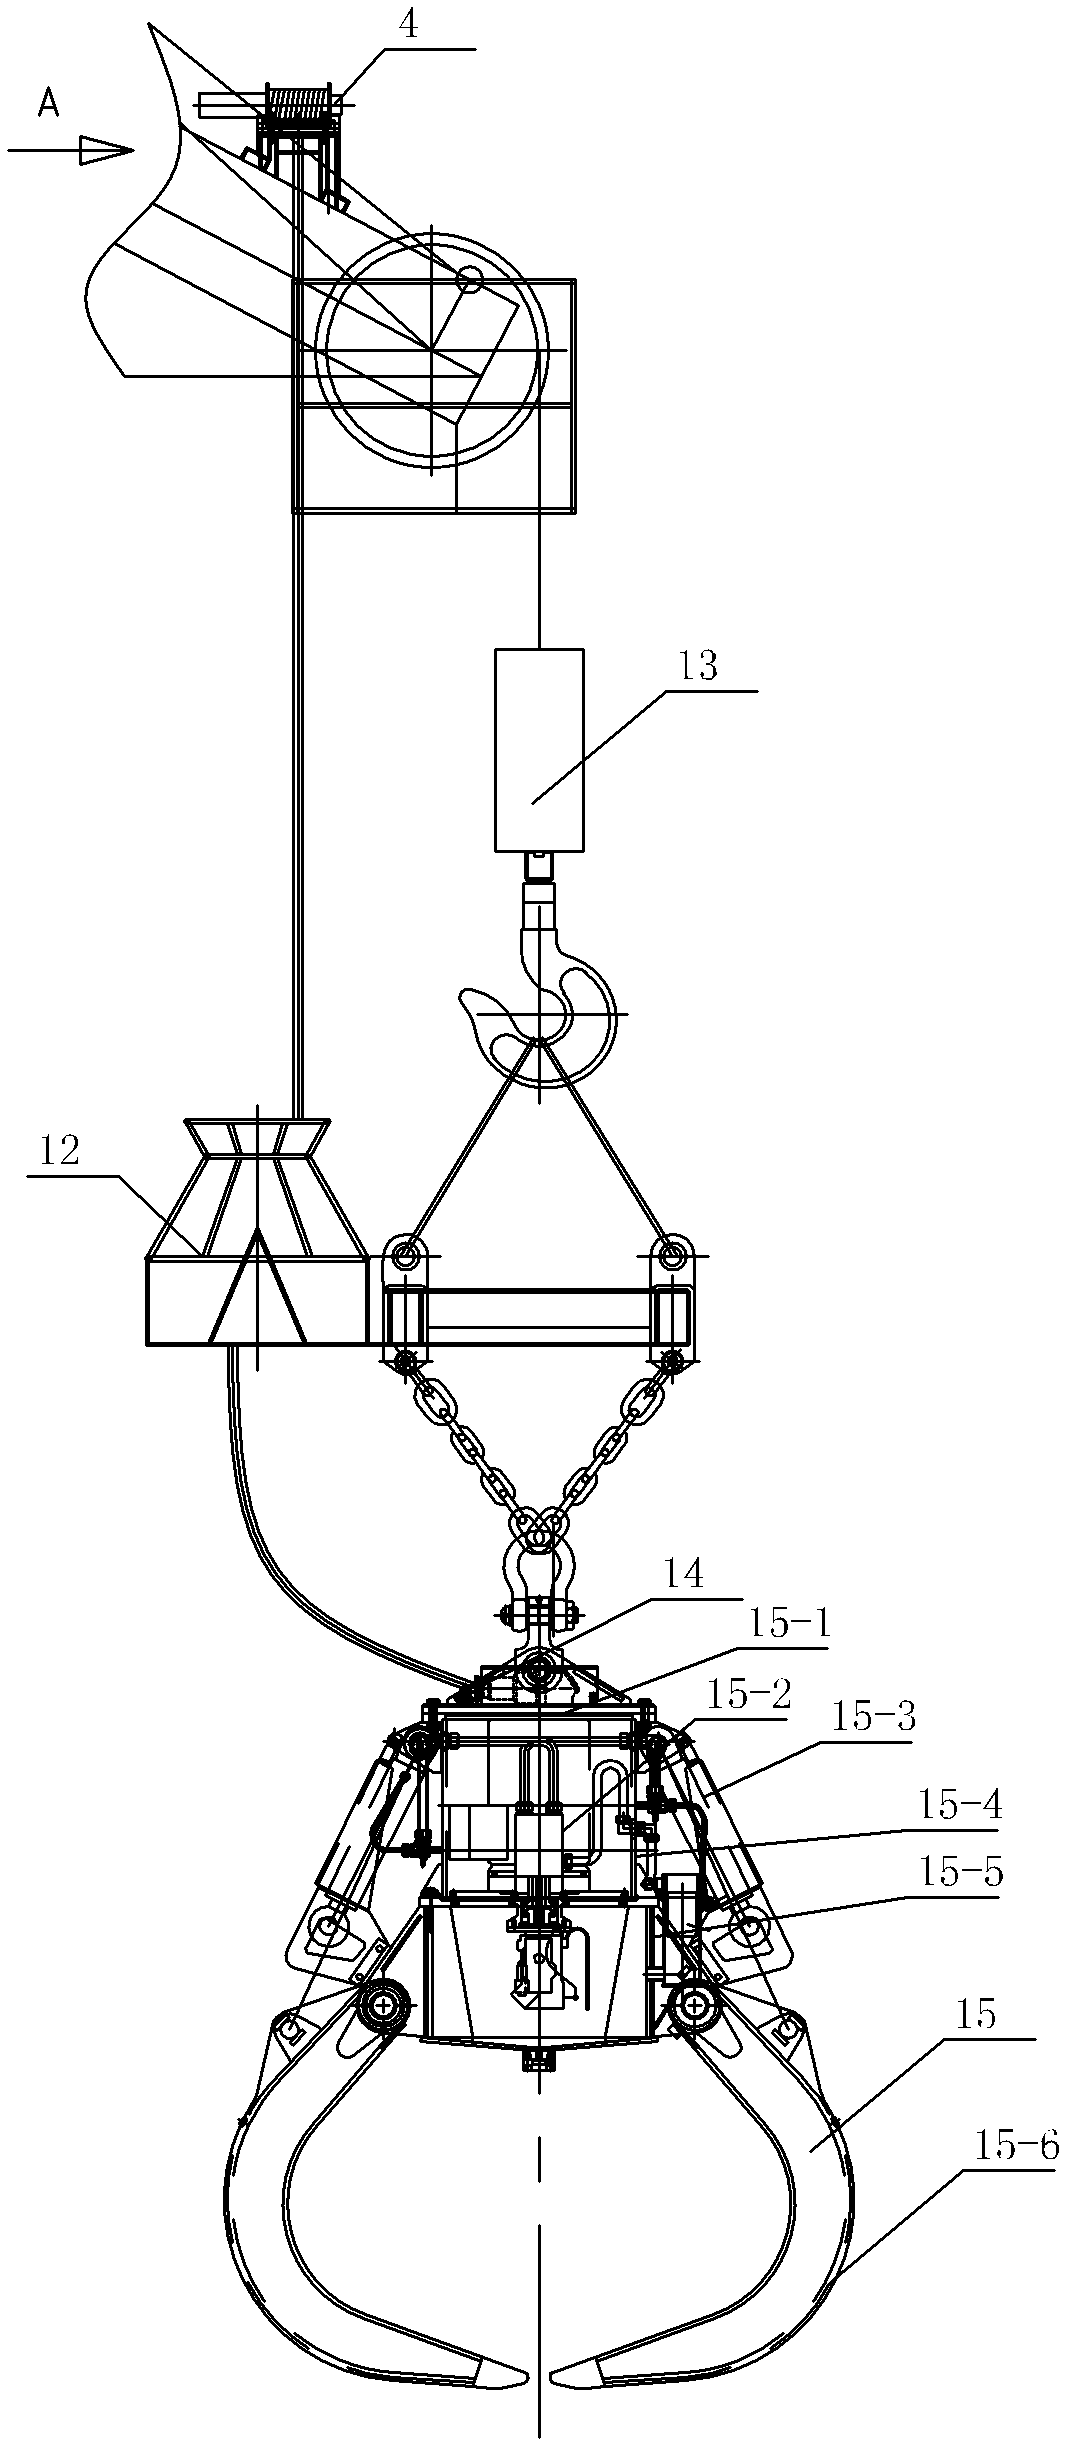 Electro-hydraulic grab bucket mechanism for portal crane